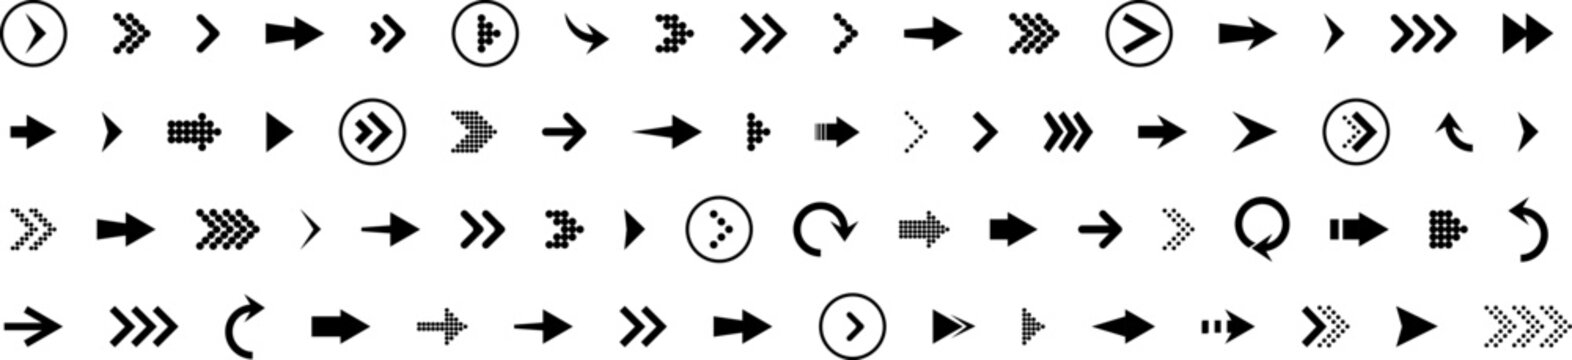 Arrows set icon. Arrows set vector illustration. Arrow icon. Arrow black colored. vector icon. Arrows vector collection. Vector